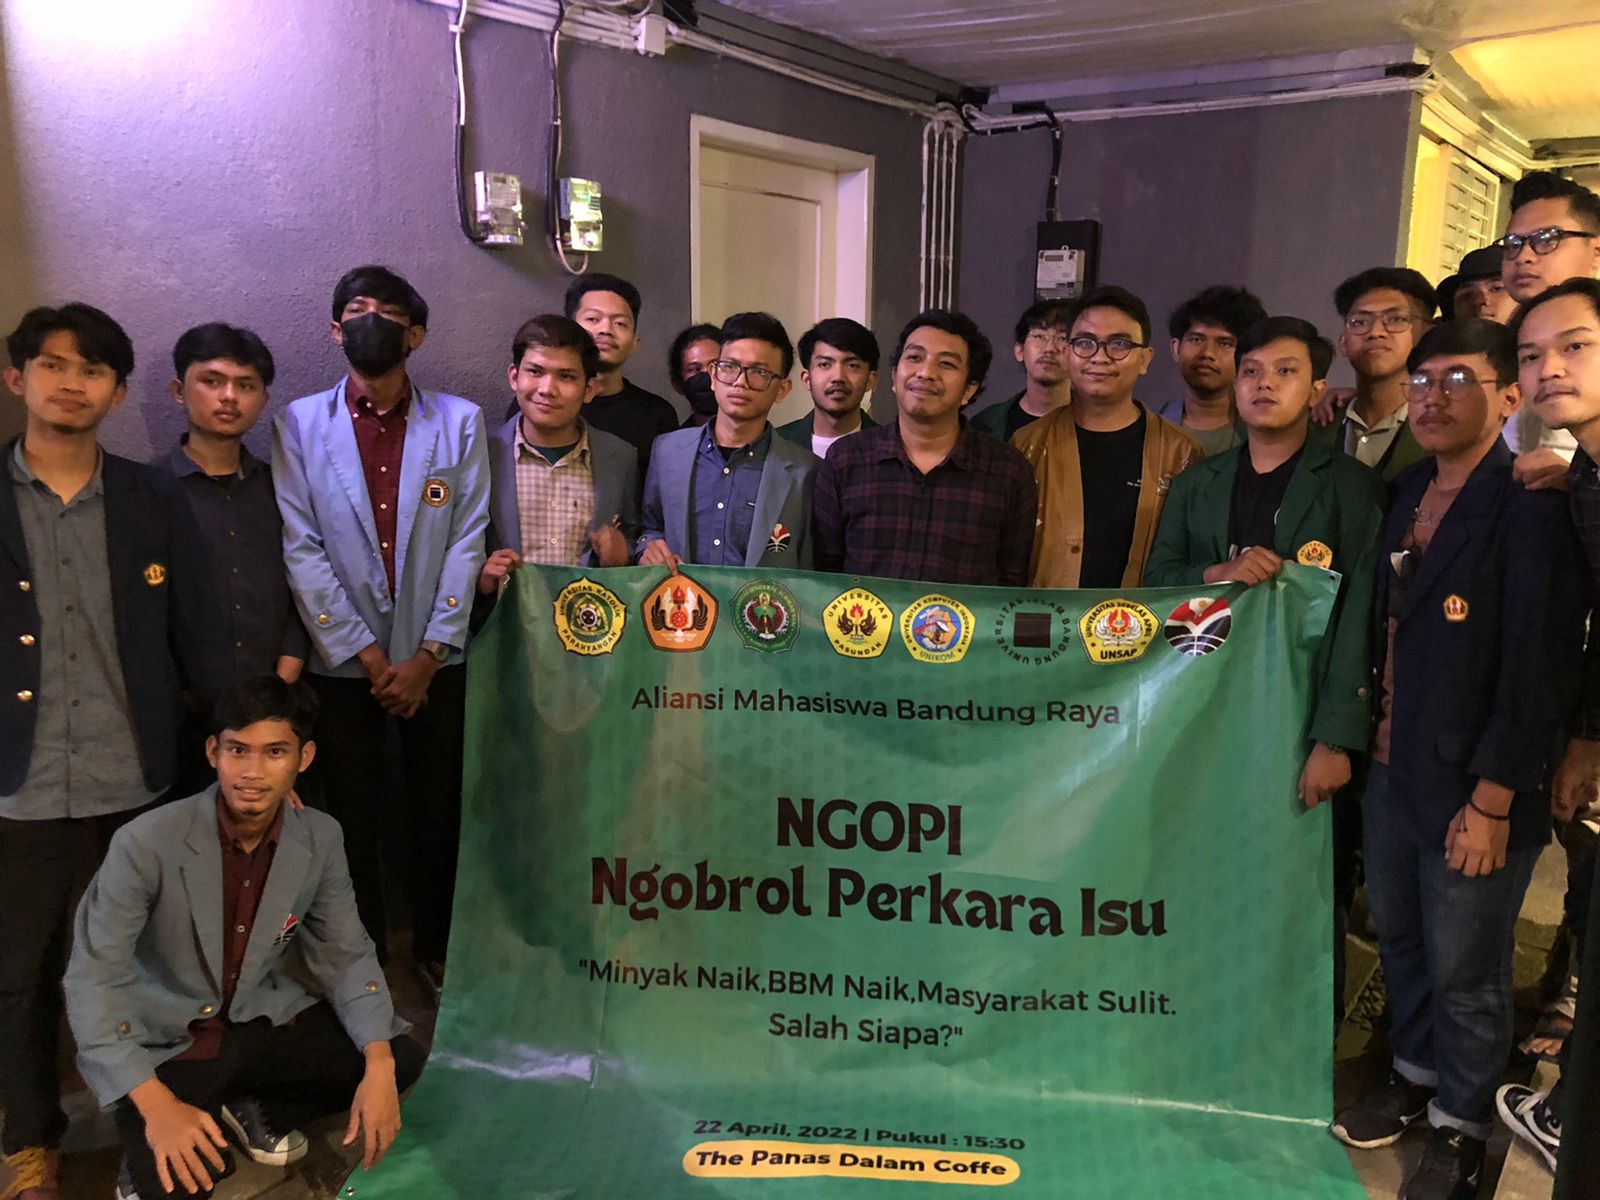 DISKUSI: Aliansi Mahasiswa SE Bandung Raya usai menggelar Diskusi Ngopi mengkritisi kenaikan harga minyak goreng dan bahan bakar minyak. ISTIMEWA